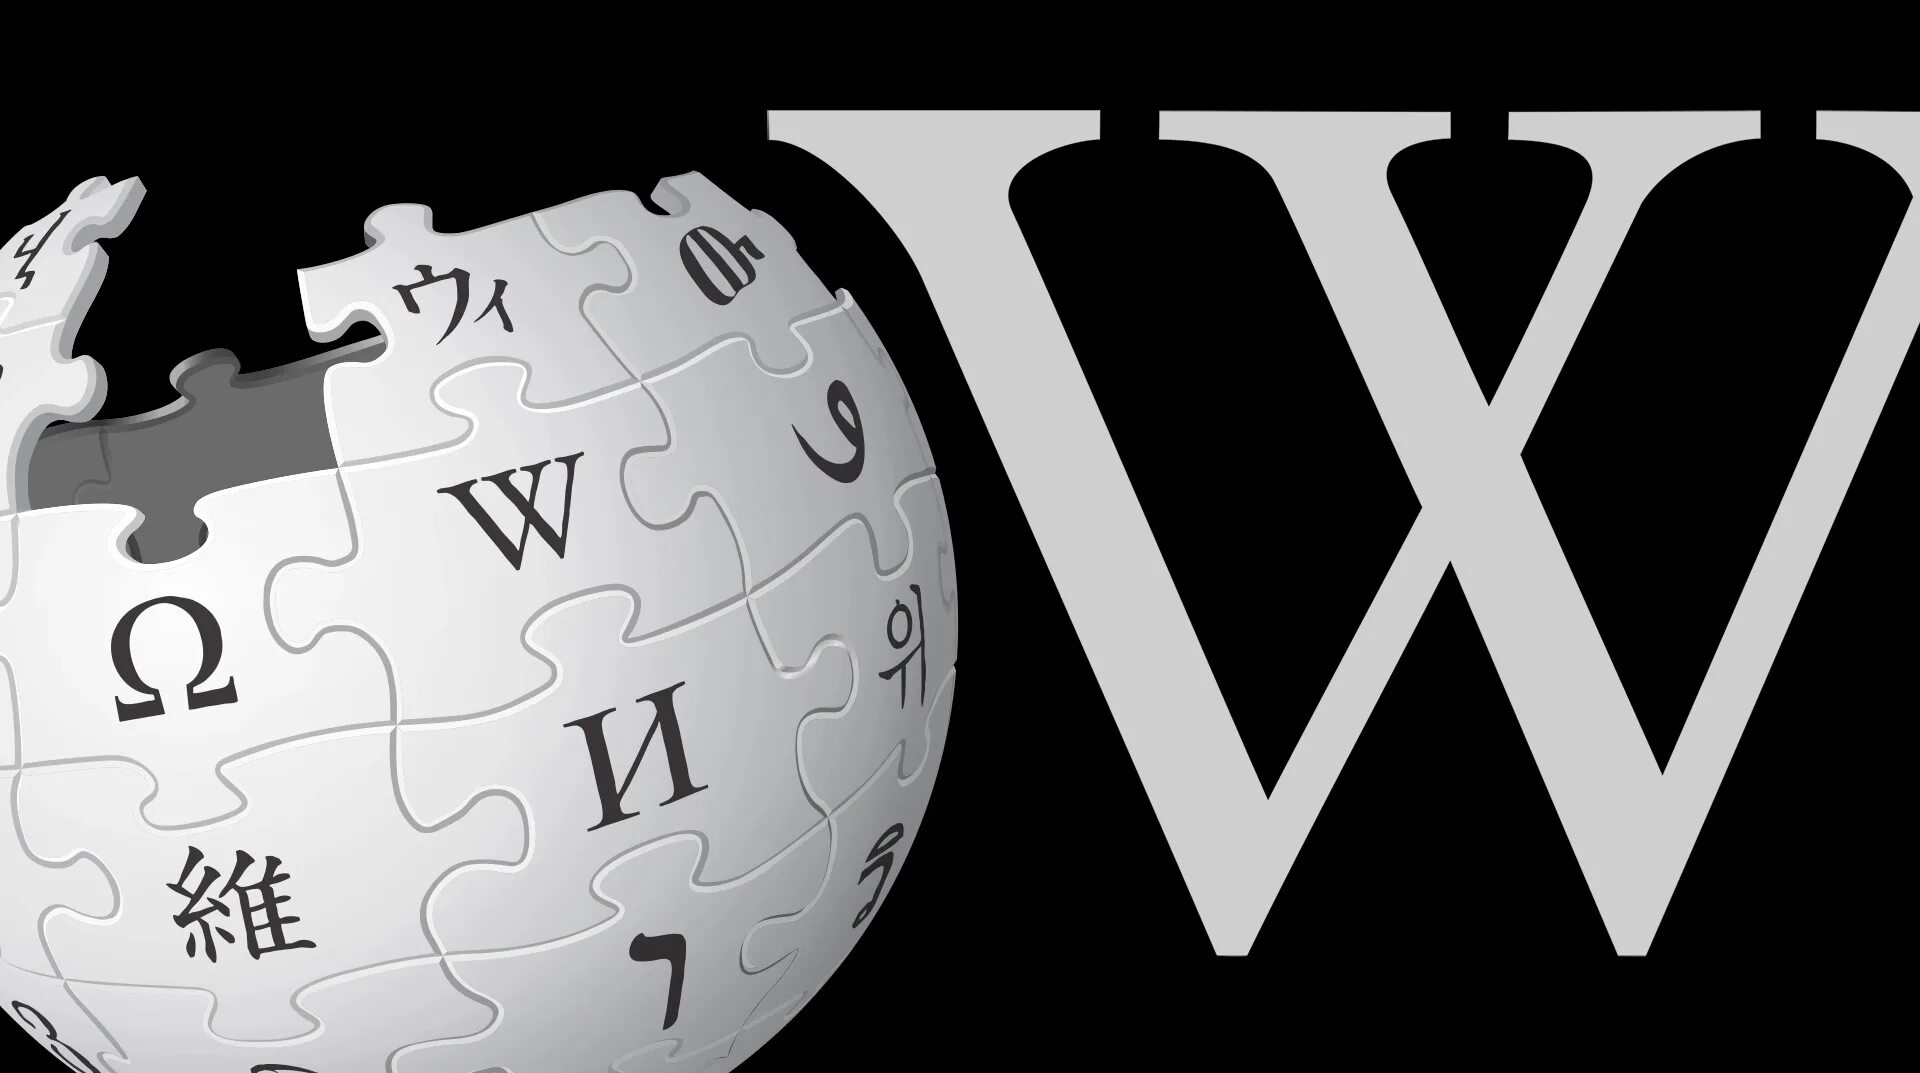 Https www wikipedia. Википедия логотип. Википедия картинки. Значок Википедии. Википедия фото.